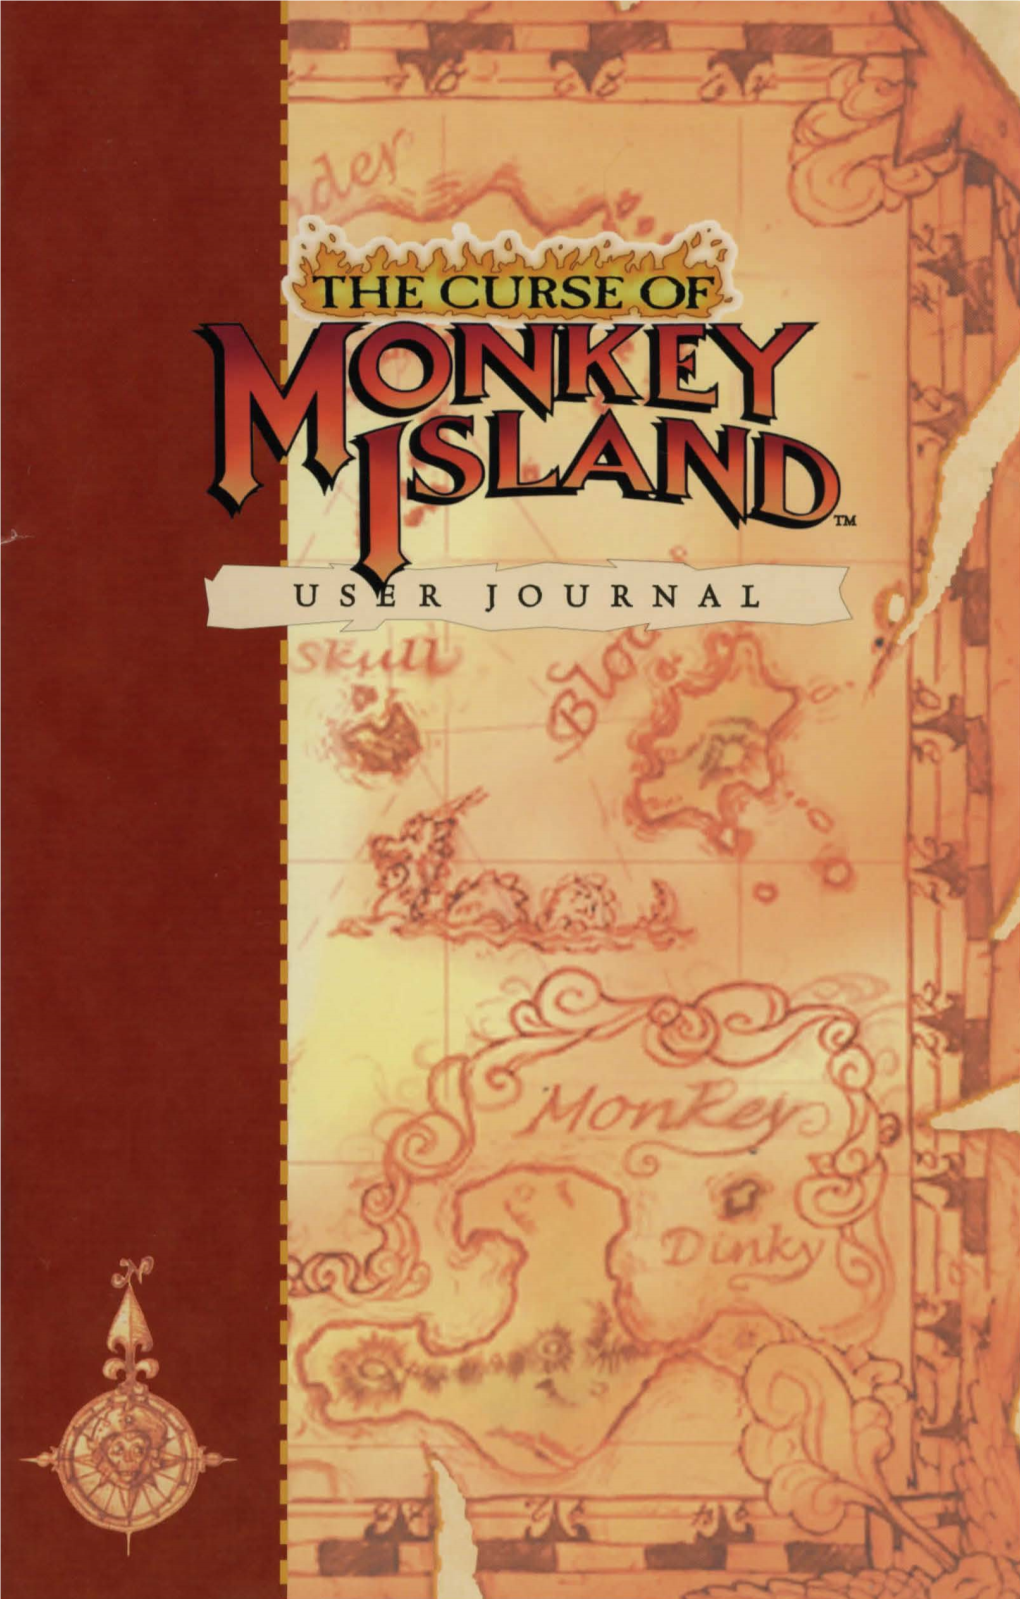 The MONKEY ISLAND Story